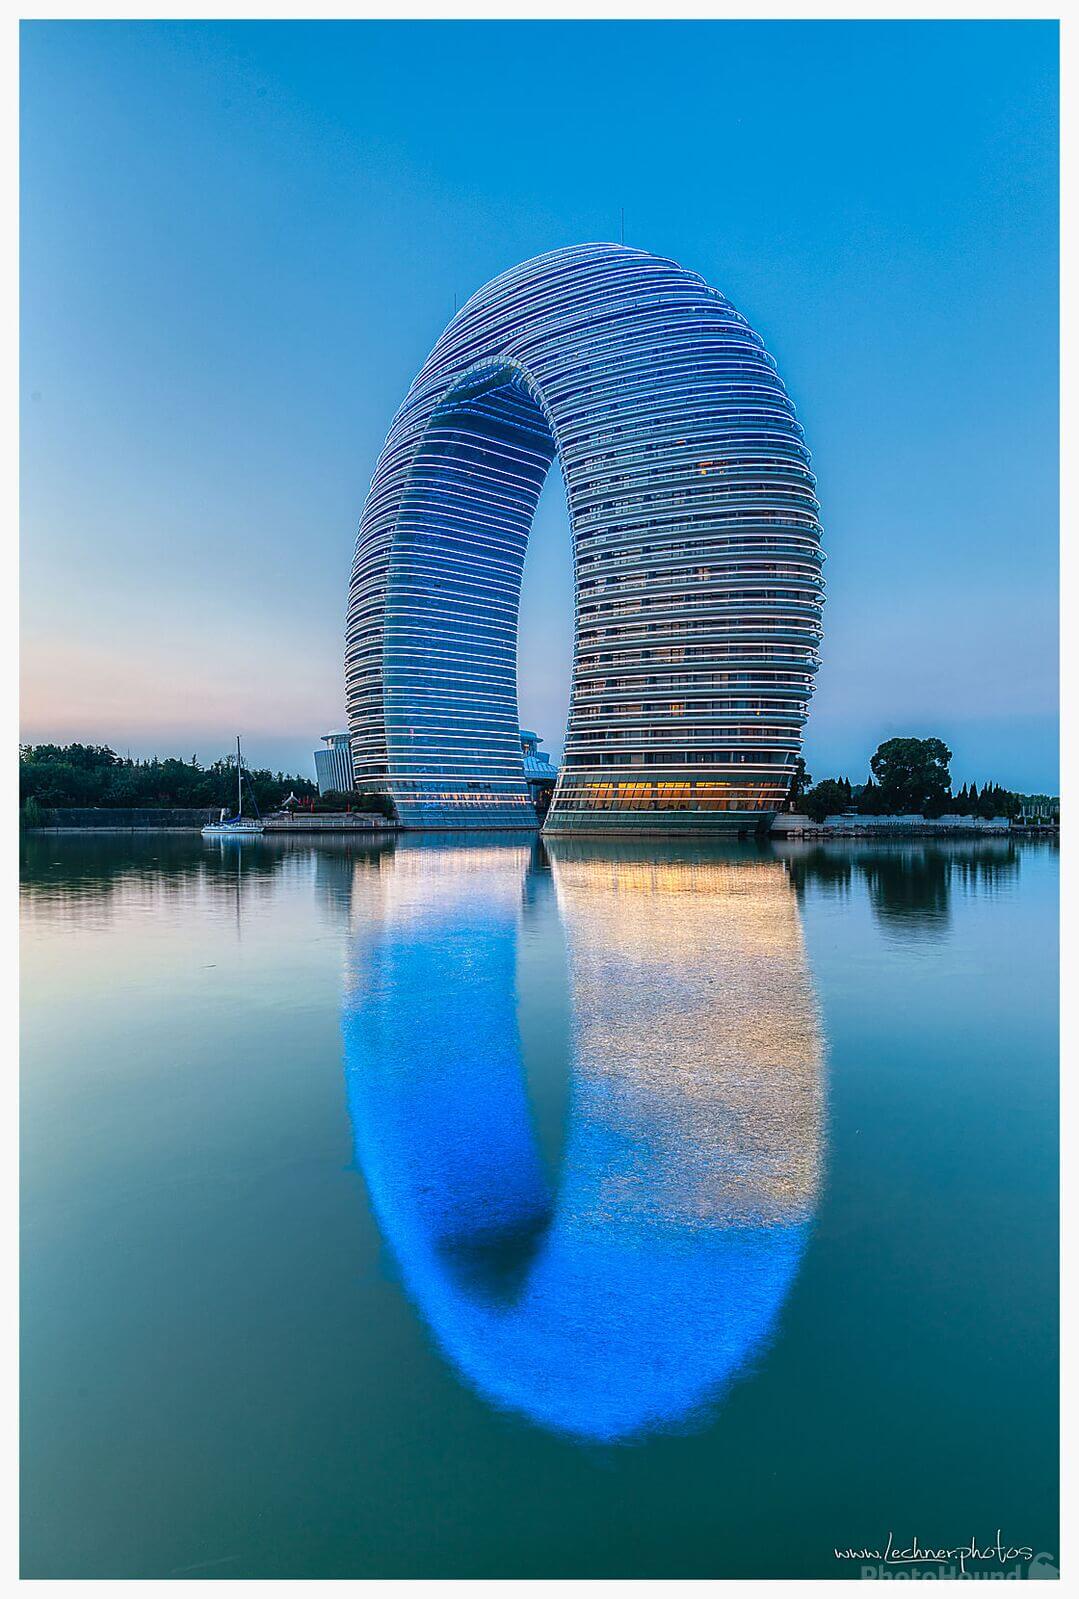 Image of Huzhou Sheraton Hot Sping Resort by Florian Lechner